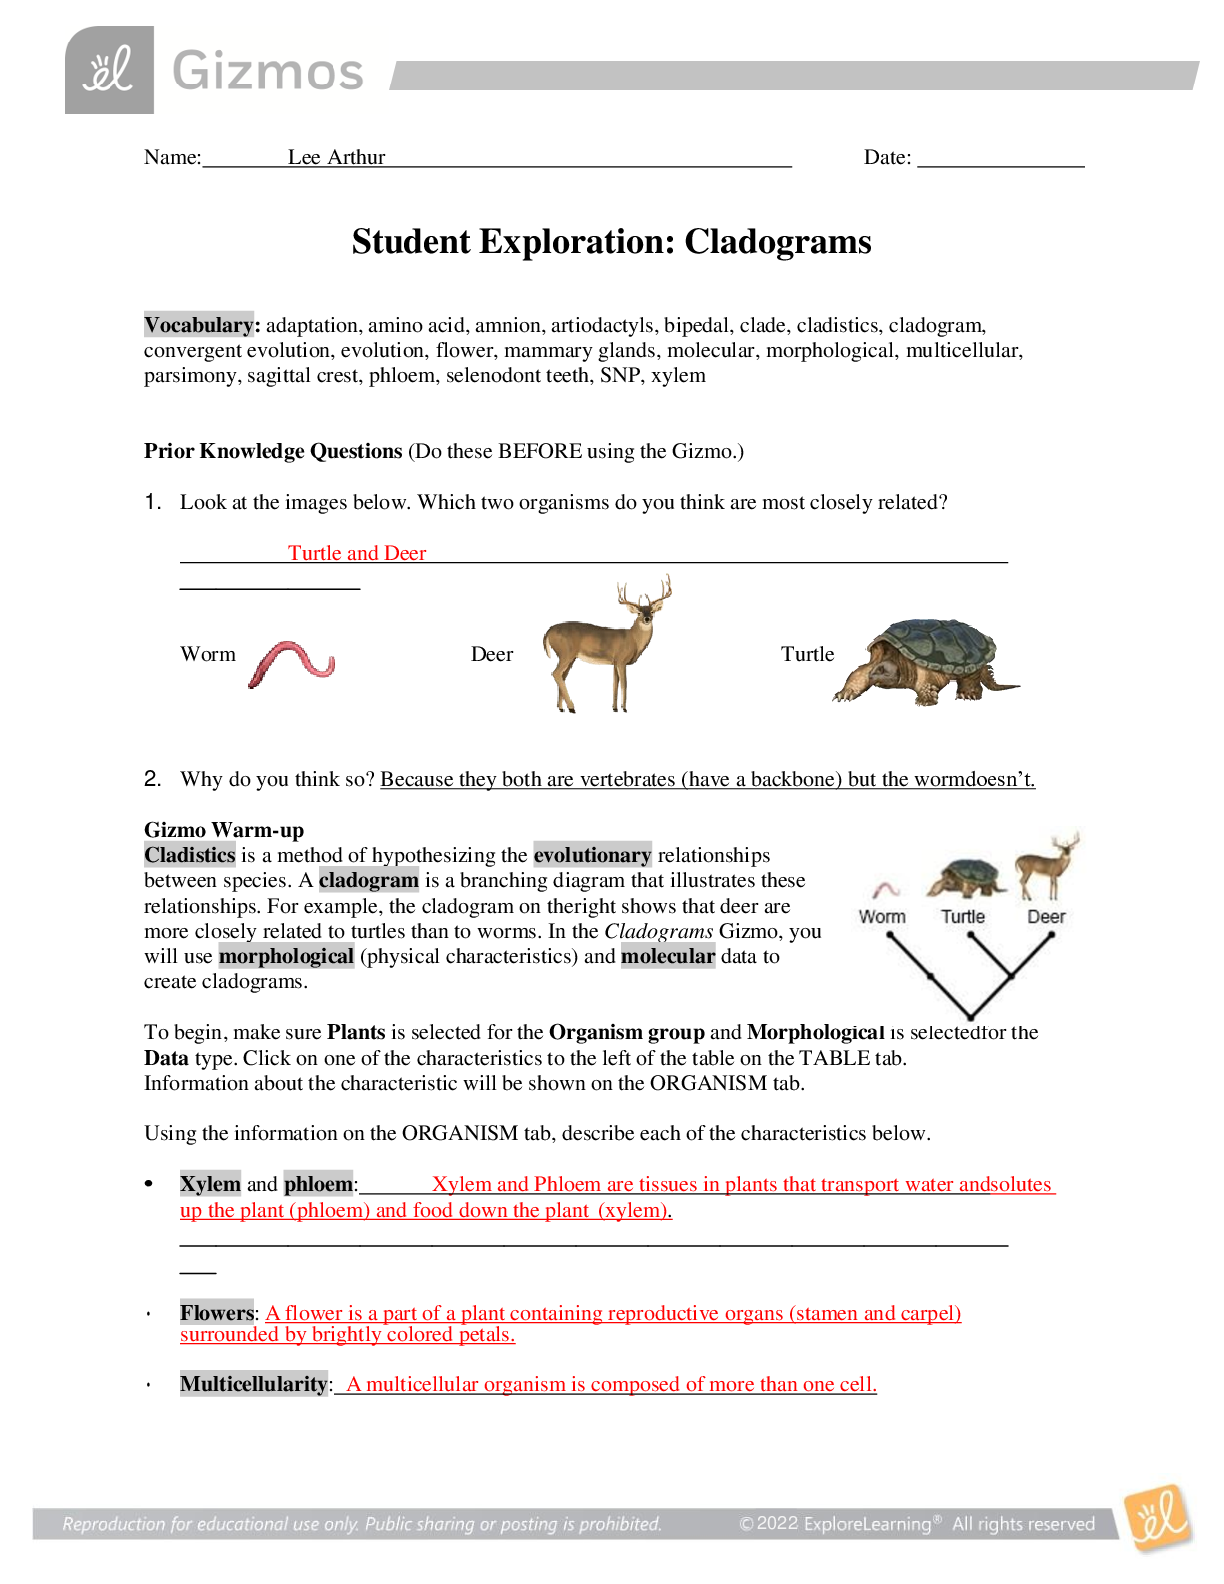 gizmos-student-exploration-cladograms-answer-key